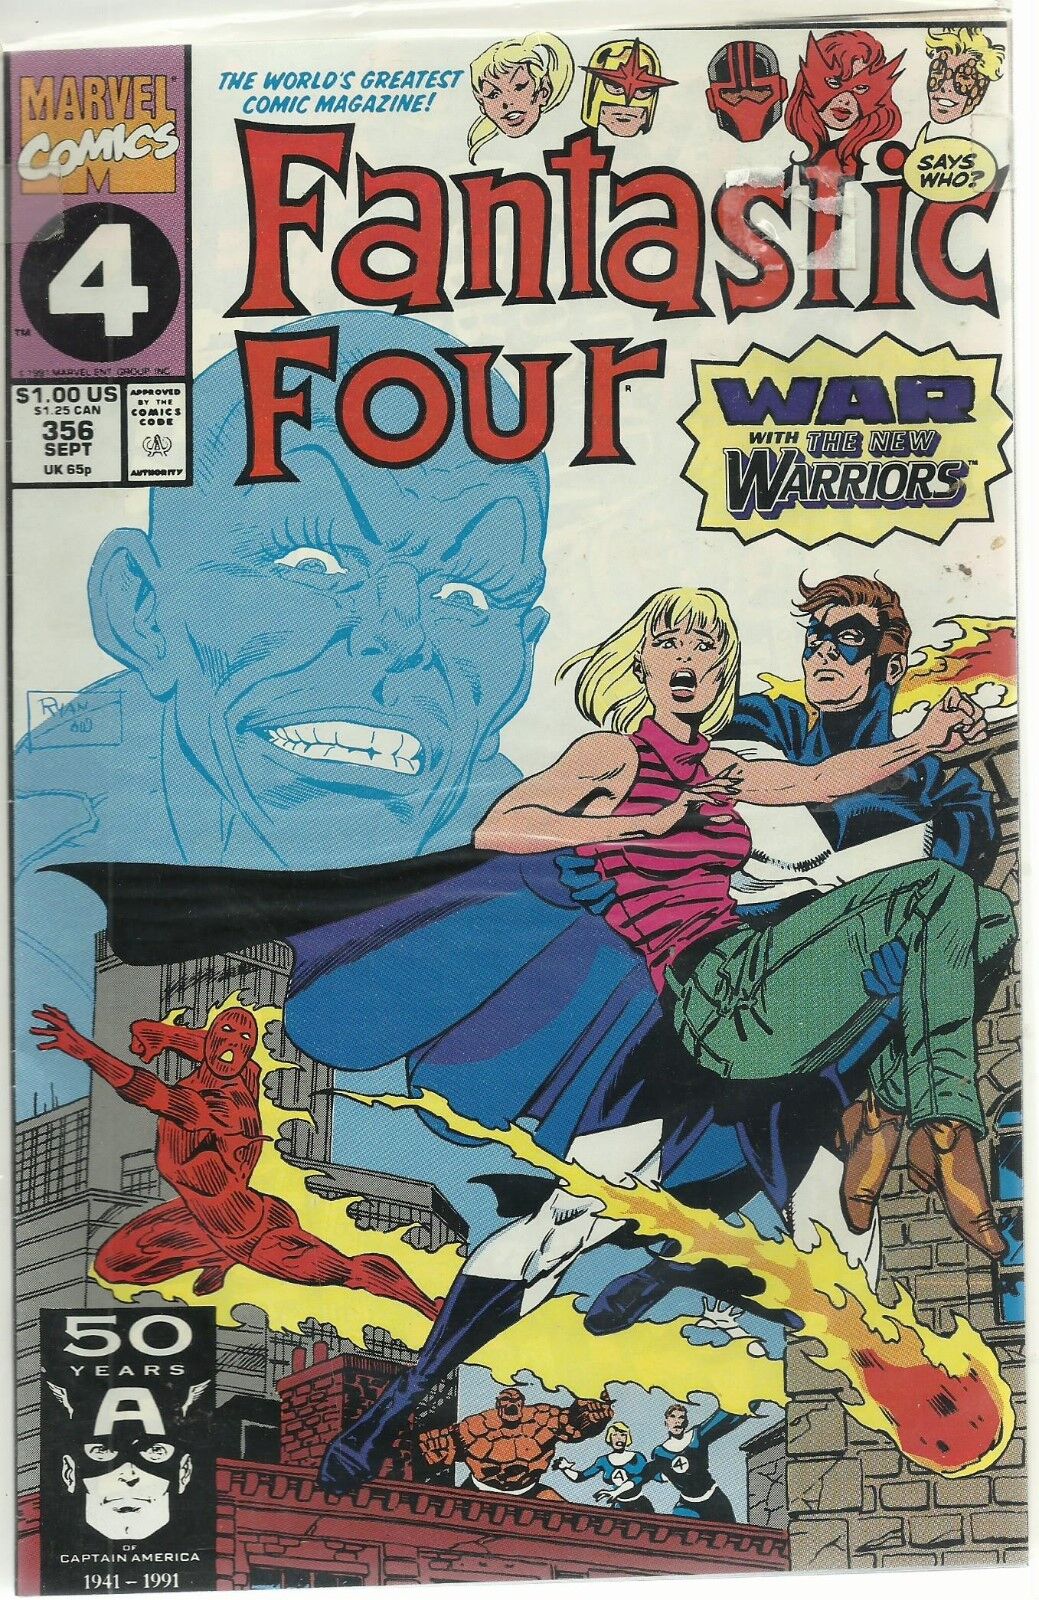 4 Marvel Comics Silver Surfer / Marvel Universe / Captain America n the Fantasti